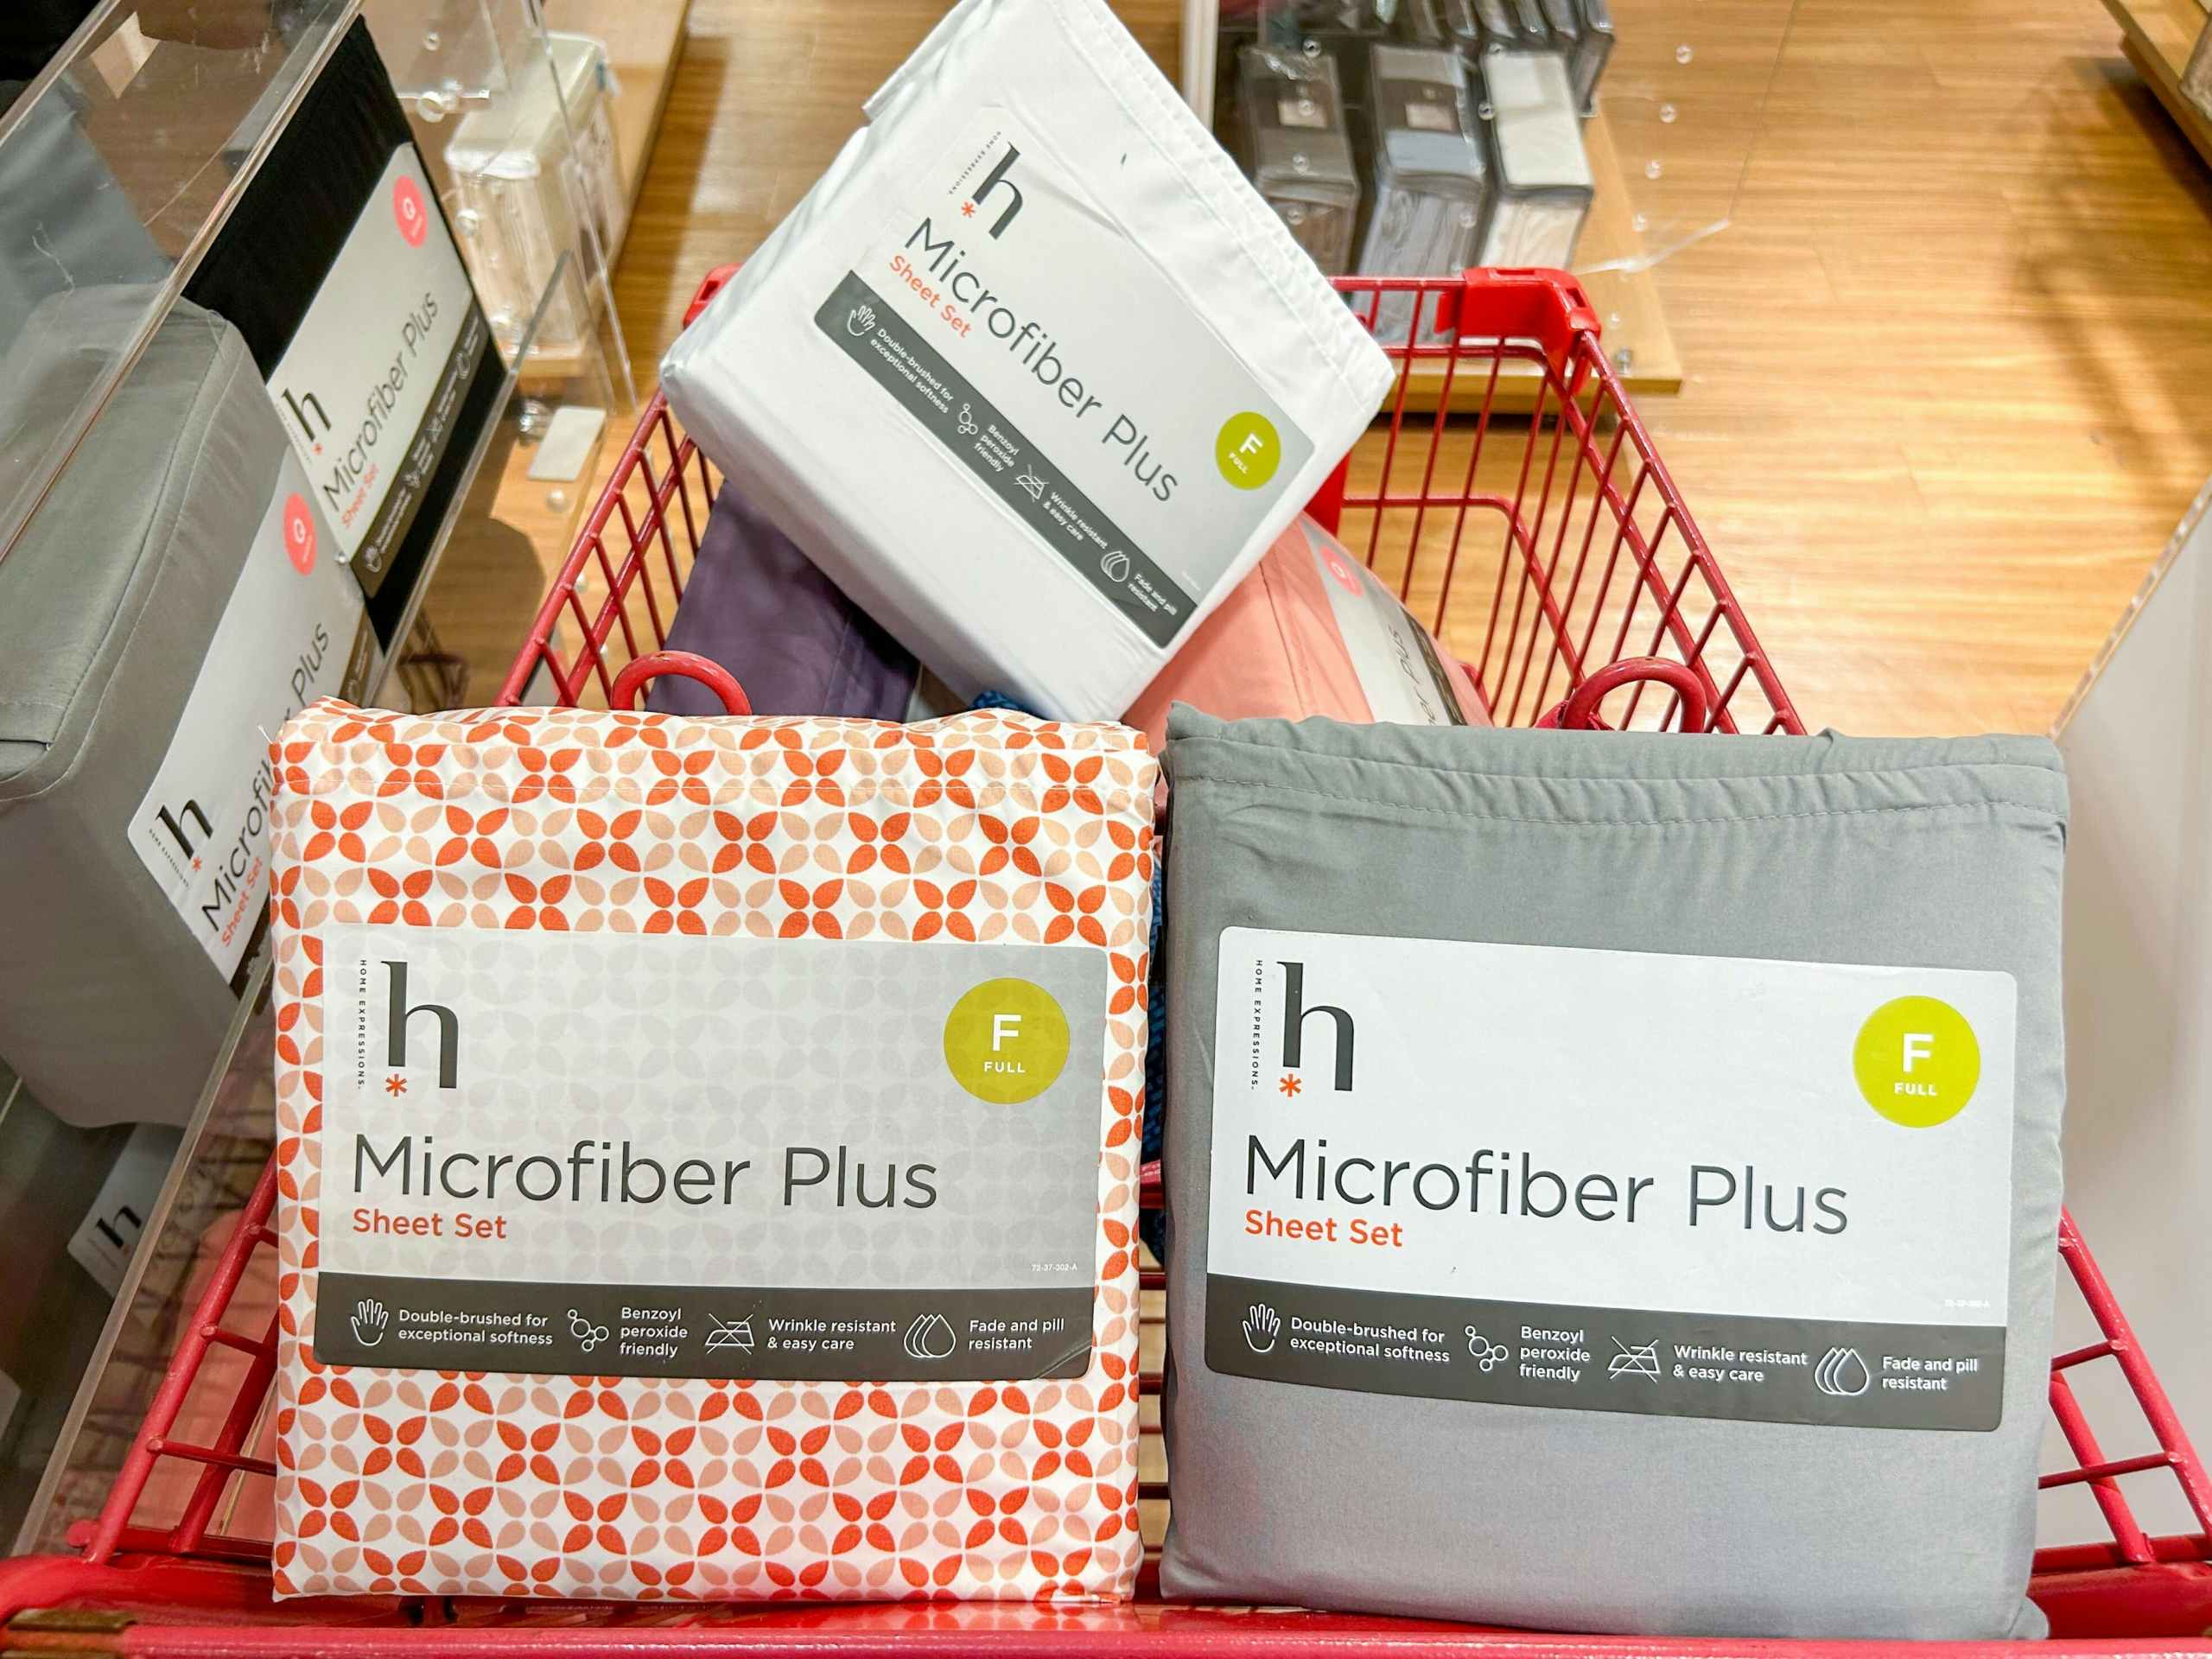 microfiber sheet sets in a shopping cart